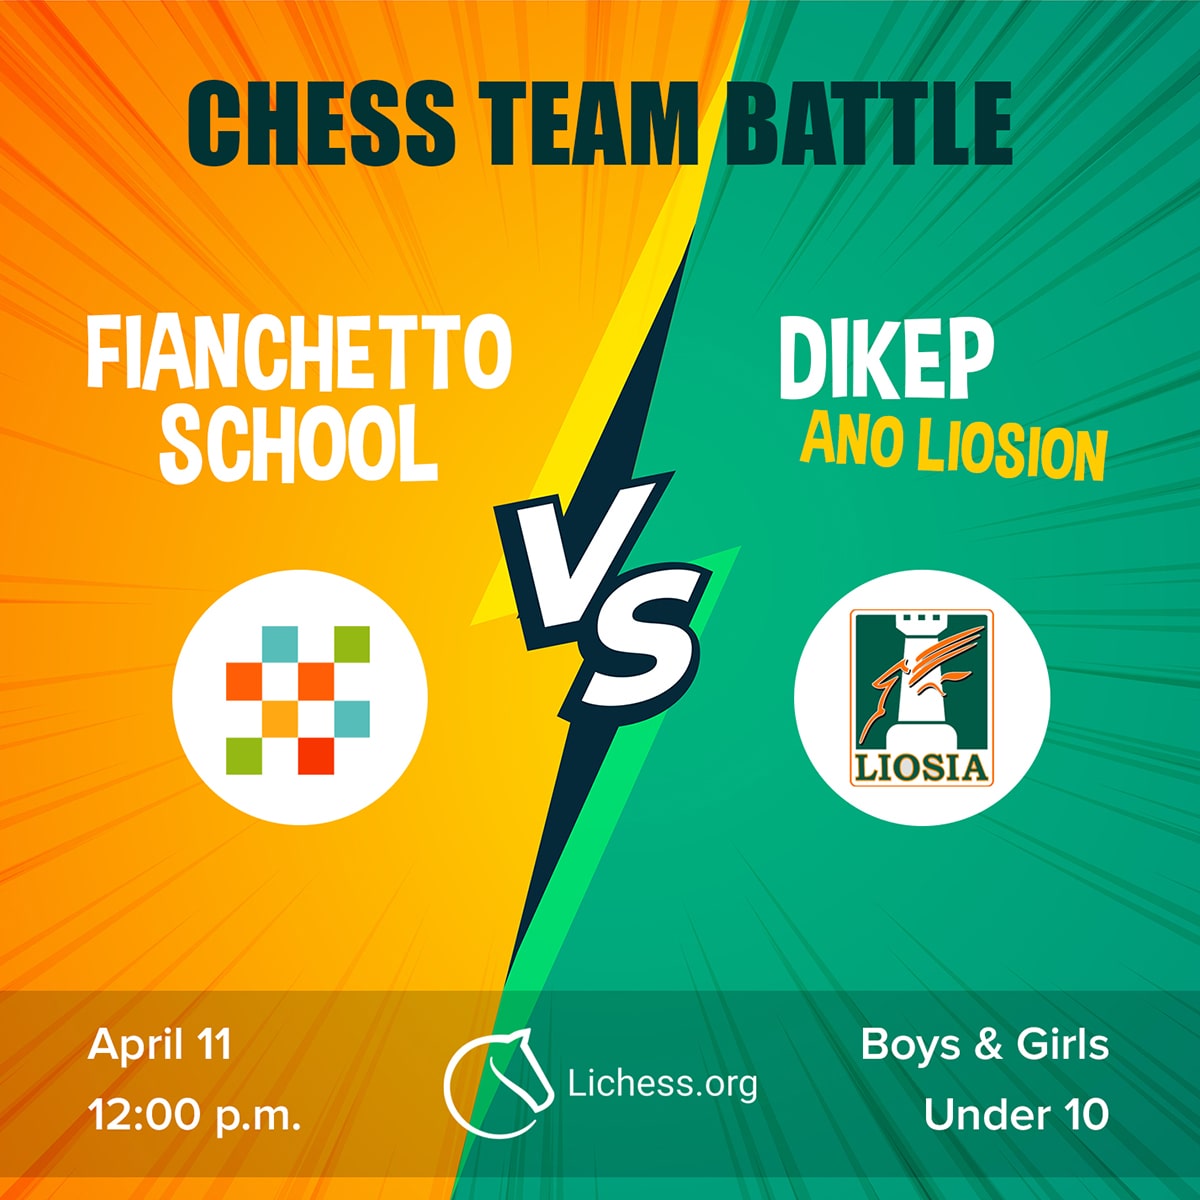 Chess Team Battle Fianchetto School vs Dikep